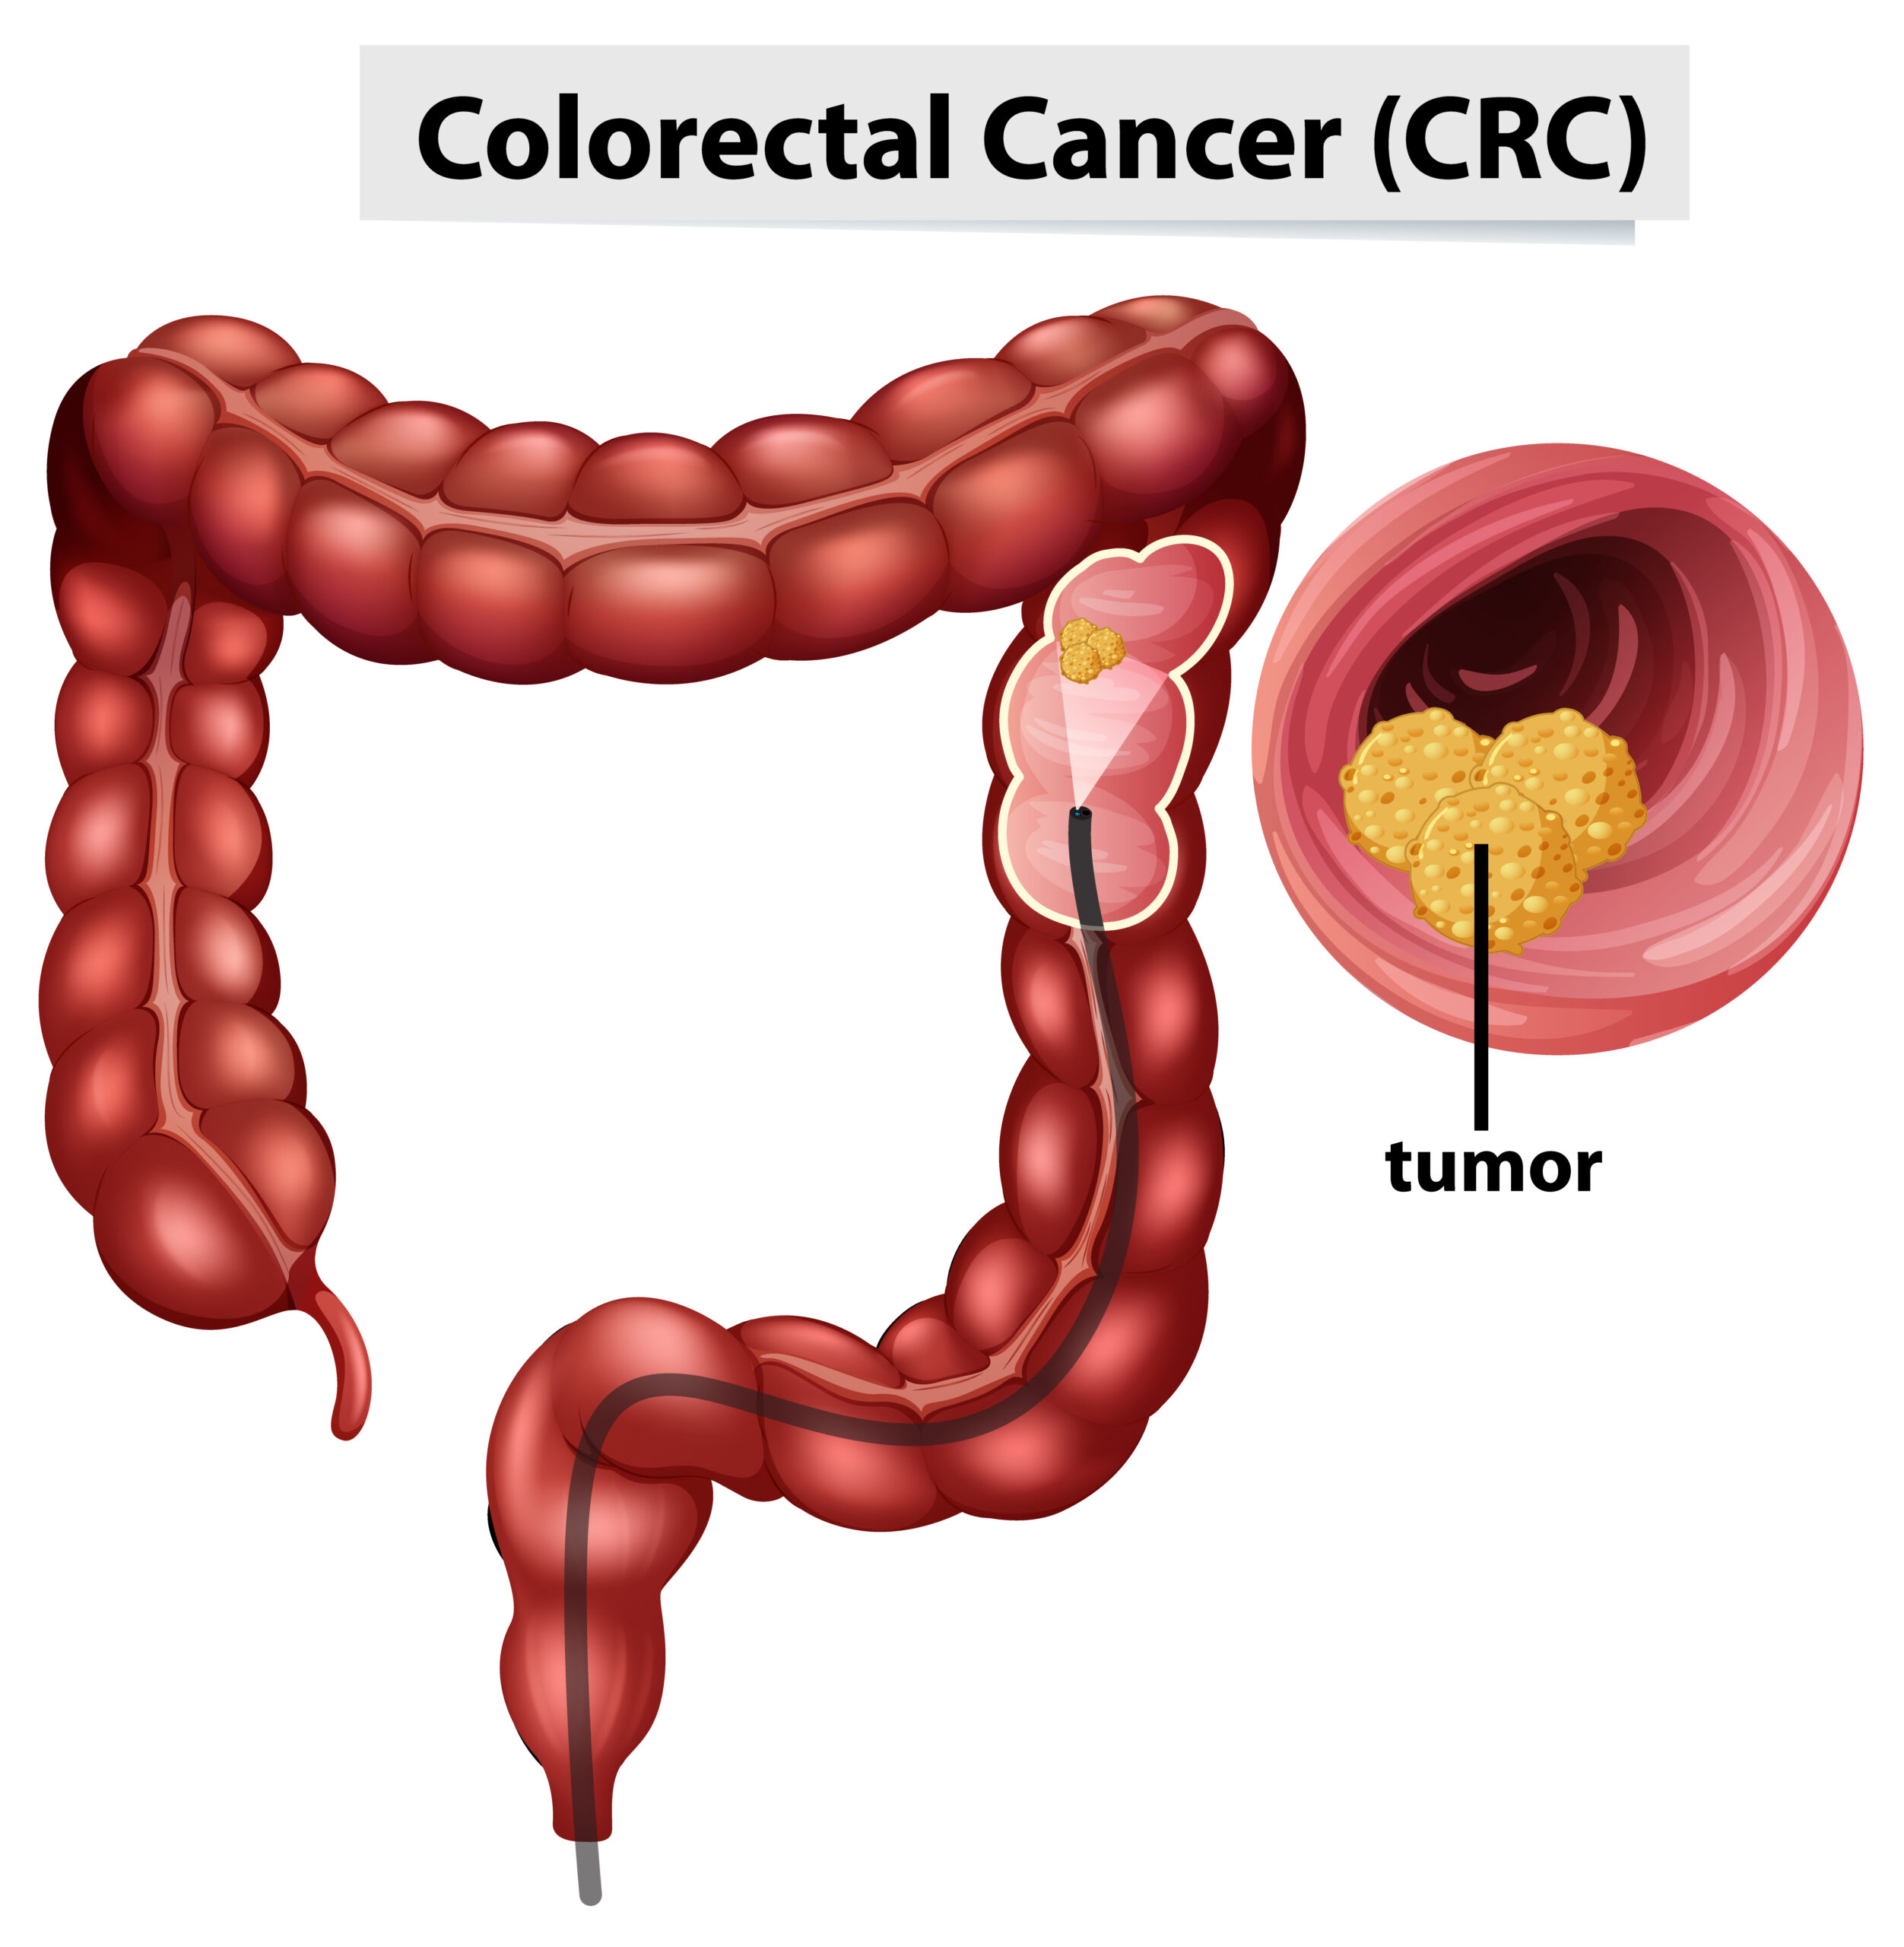 Brillar saber Céntrico Colon Cancer and Rectal Cancers - Dr. Ram Chandra Soni